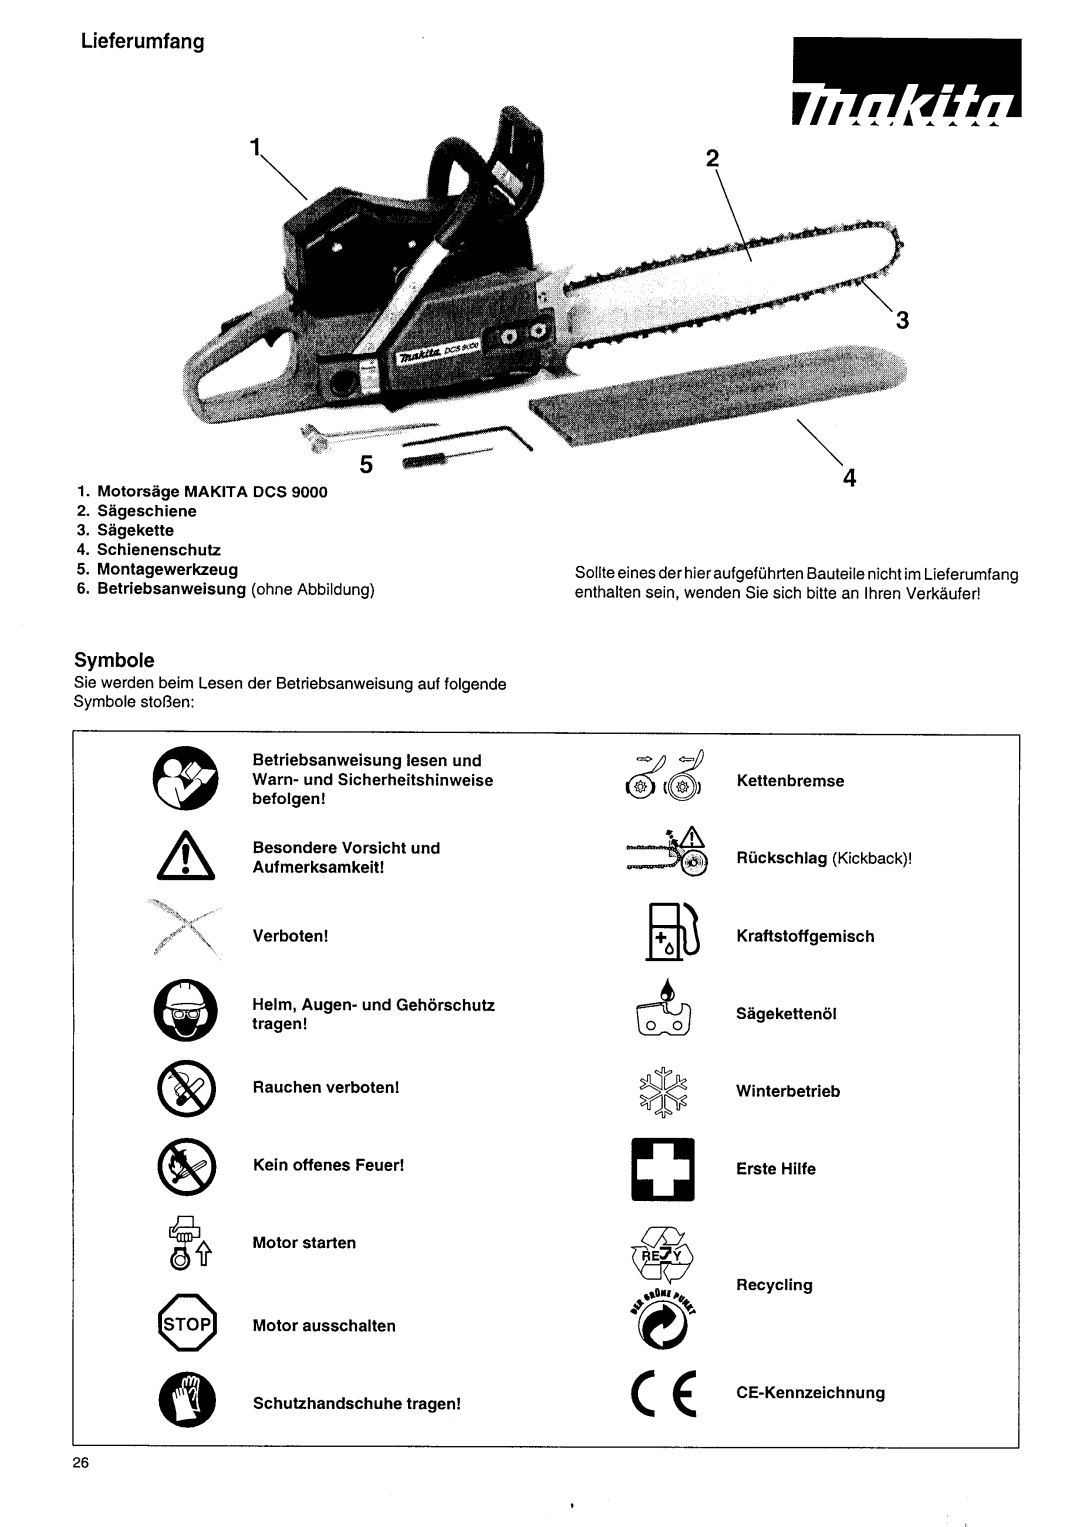 Makita DCS 9000 Lieferumfang, Symbole, Motorsage MAKITA DCS 2.Sageschiene 3.Sagekette, Schienenschutz 5.Montagewerkzeug 